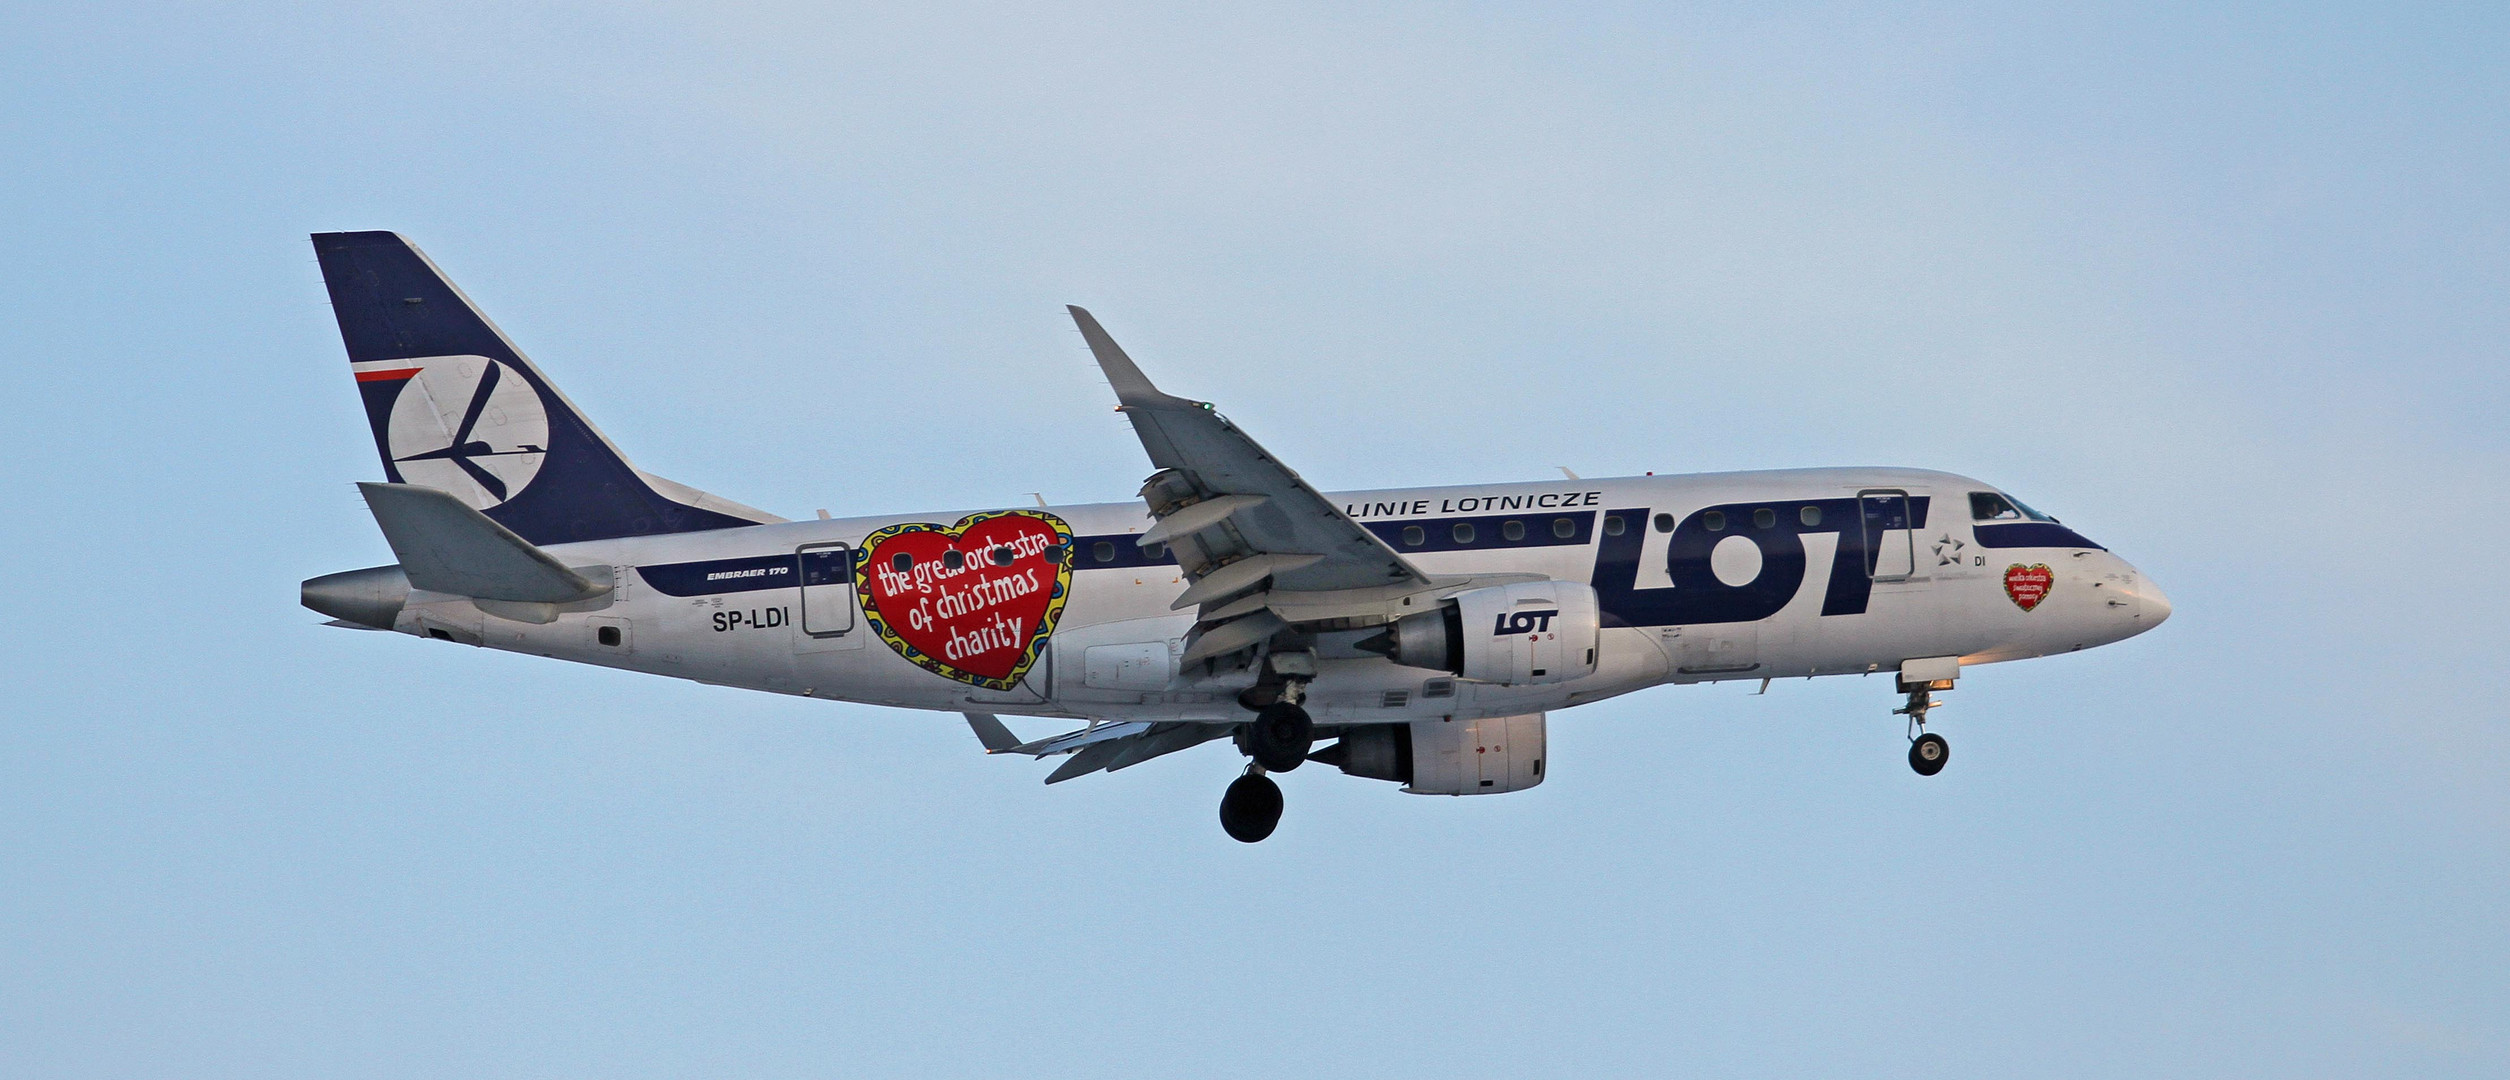 LOT - Polish Airlines / Polskie Linie Lotnicze mit Christmas Charity - Sticker